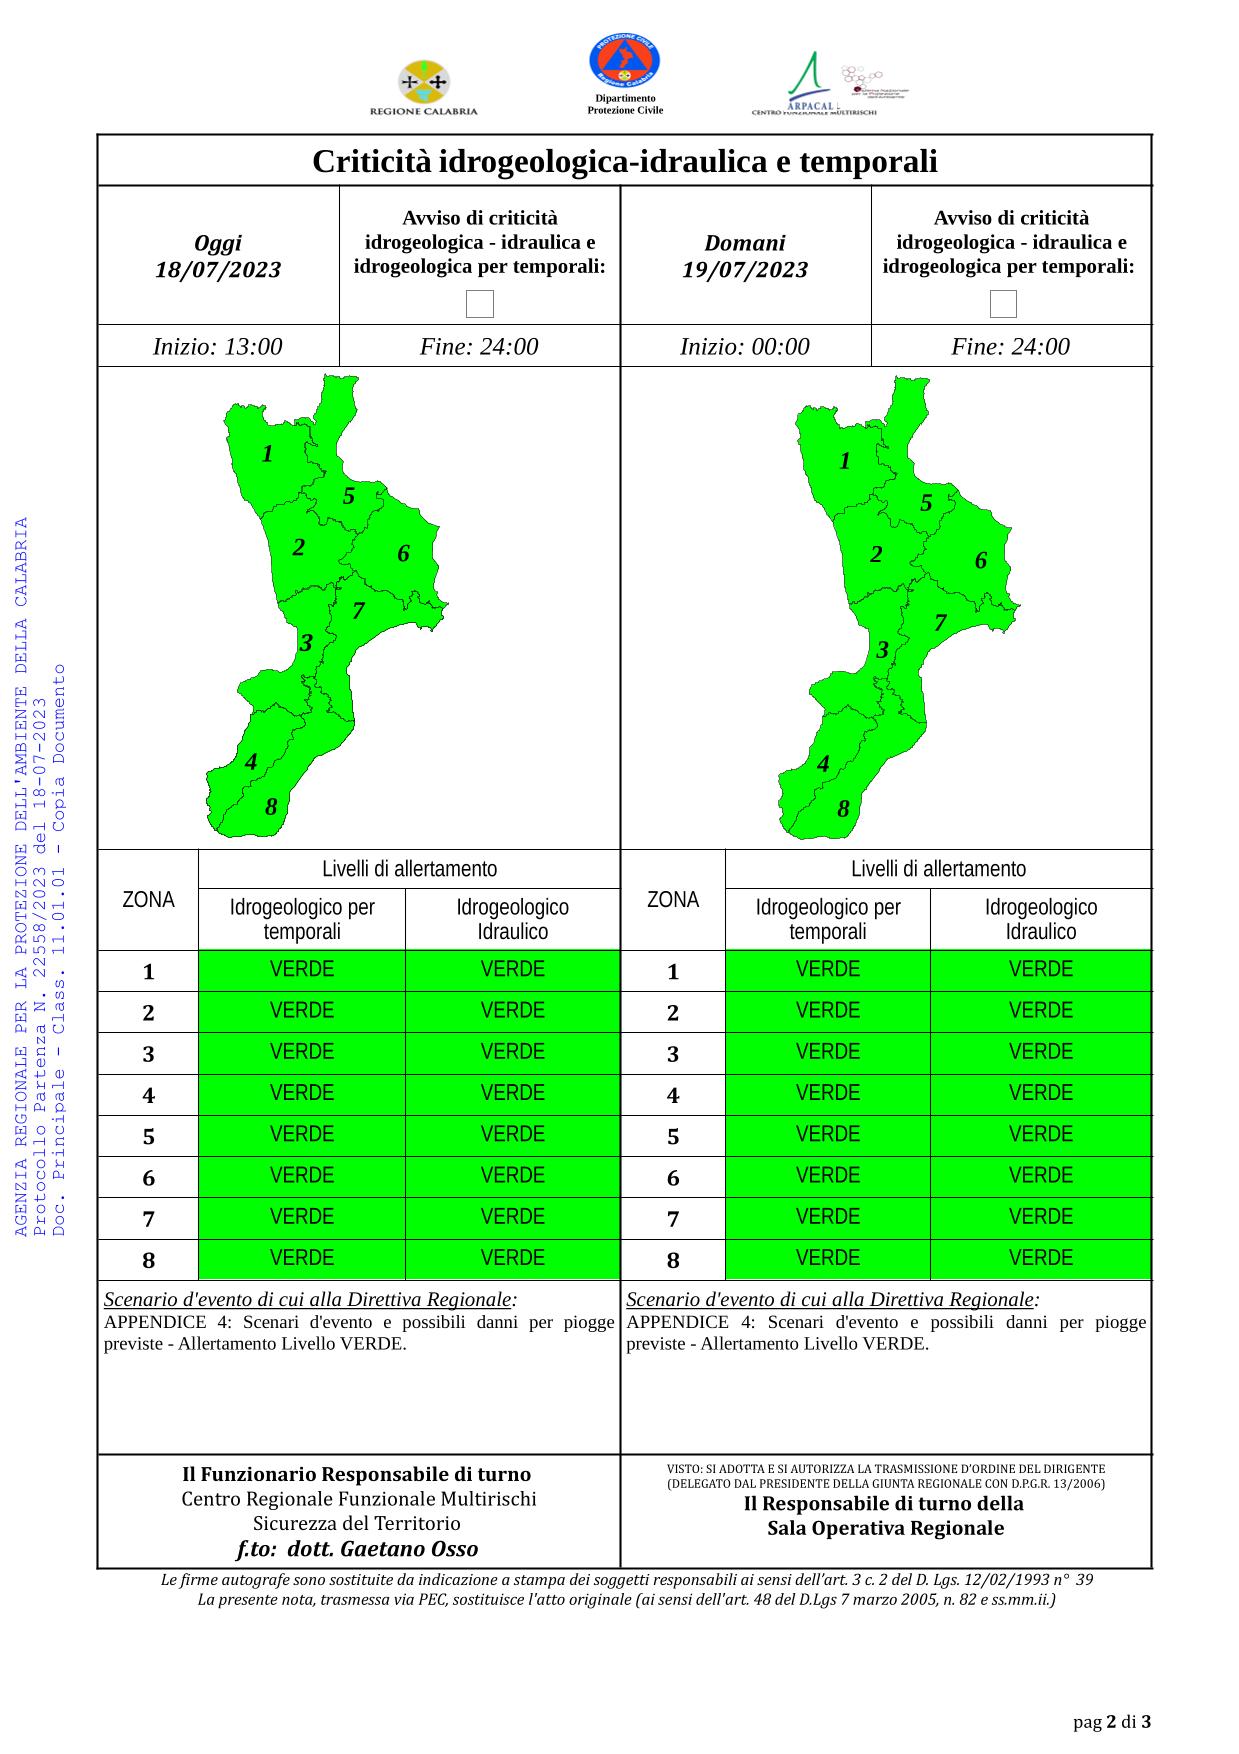 Criticità idrogeologica-idraulica e temporali in Calabria 18-07-2023